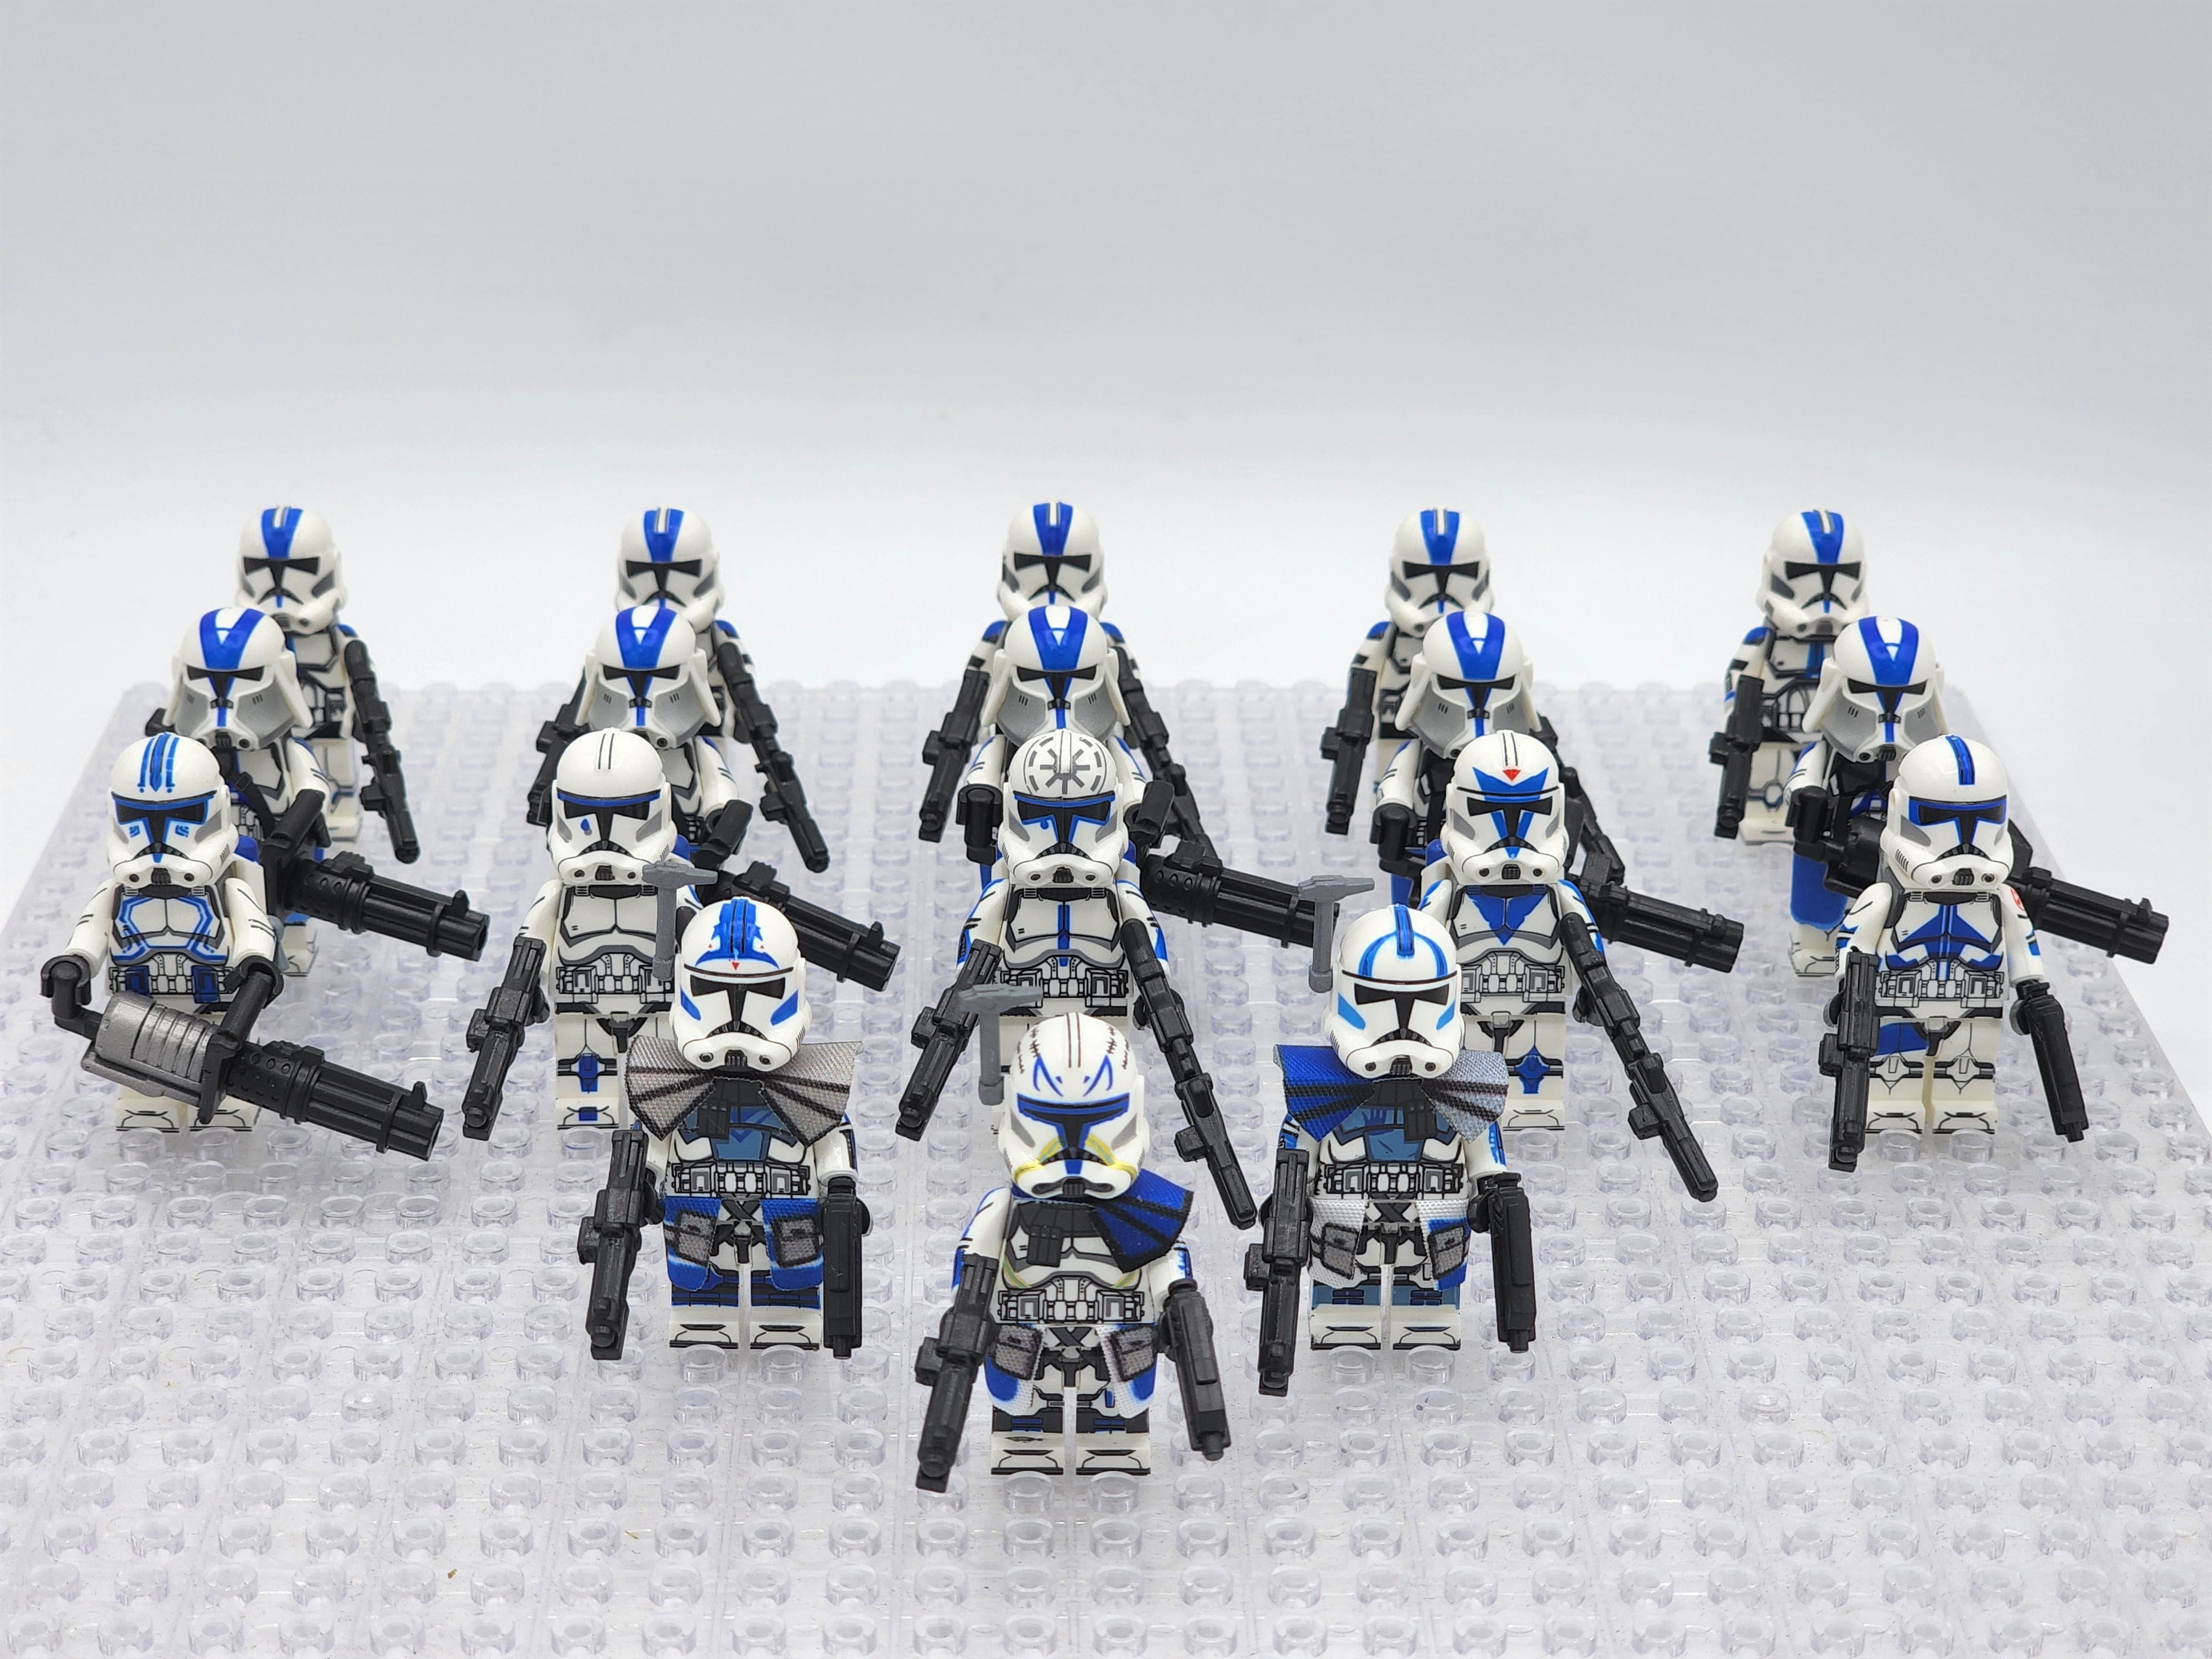 Lego Commander Rex Minifigure | tunersread.com